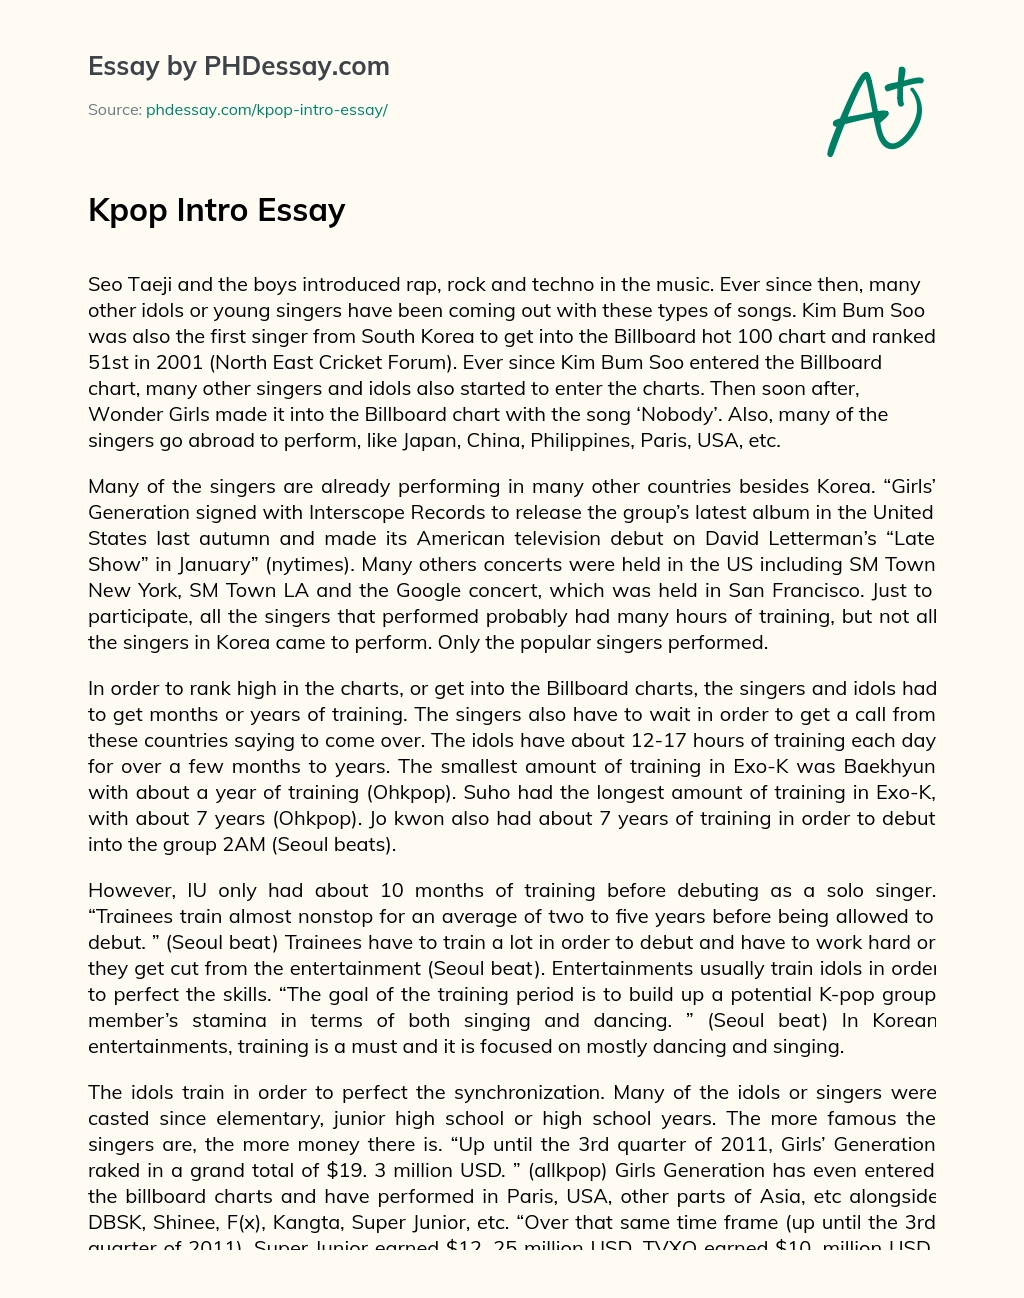 Kpop Intro Essay essay